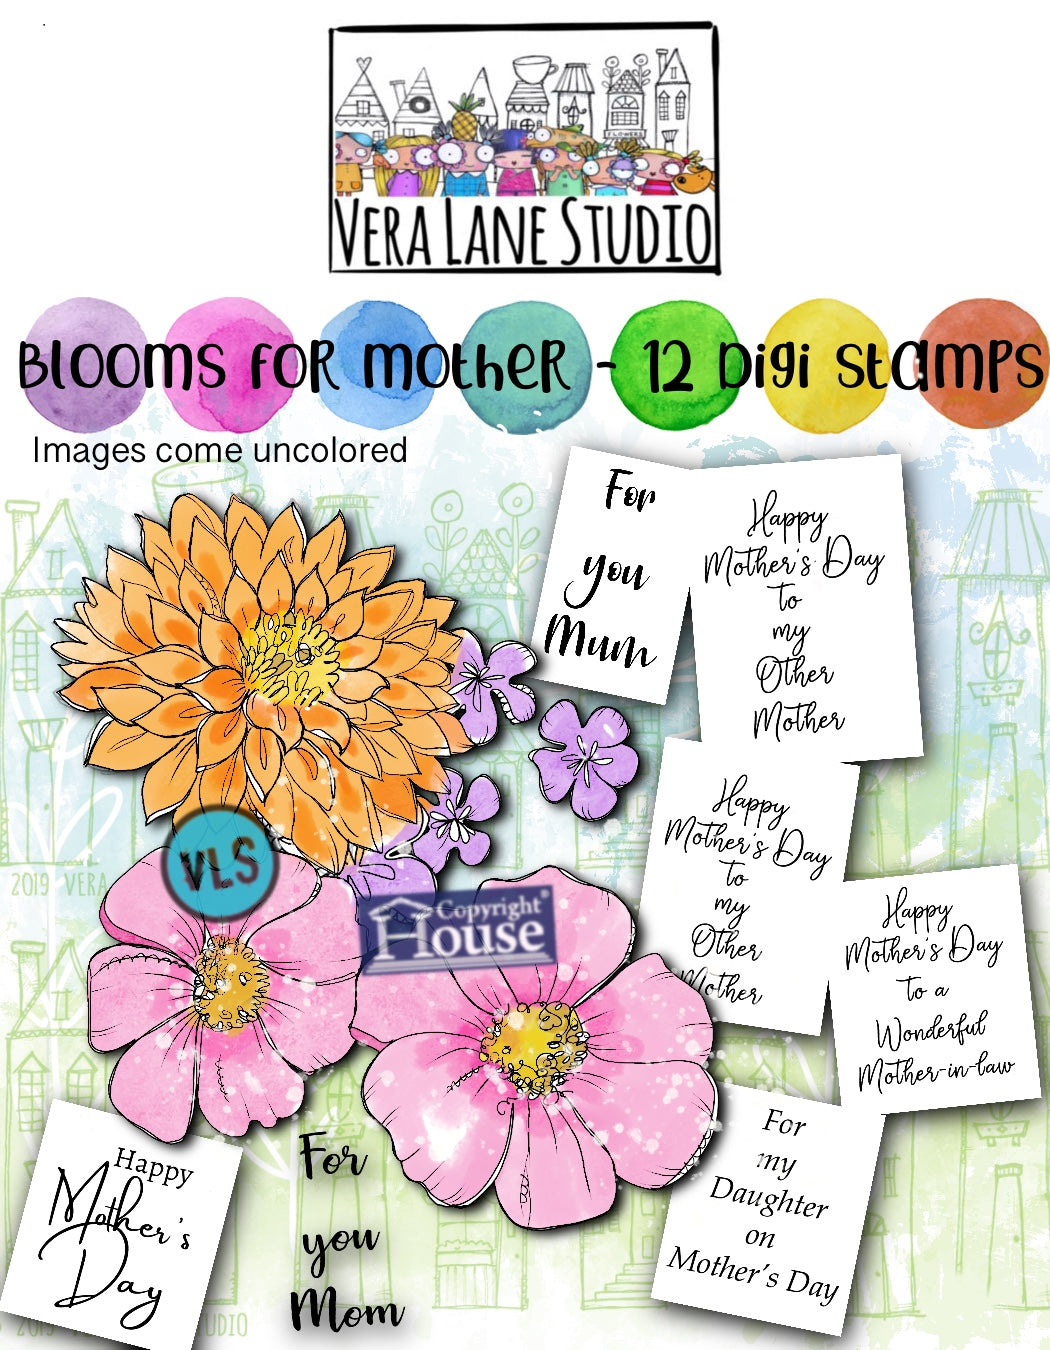 Blooms for a Mother - 12 digi stamp